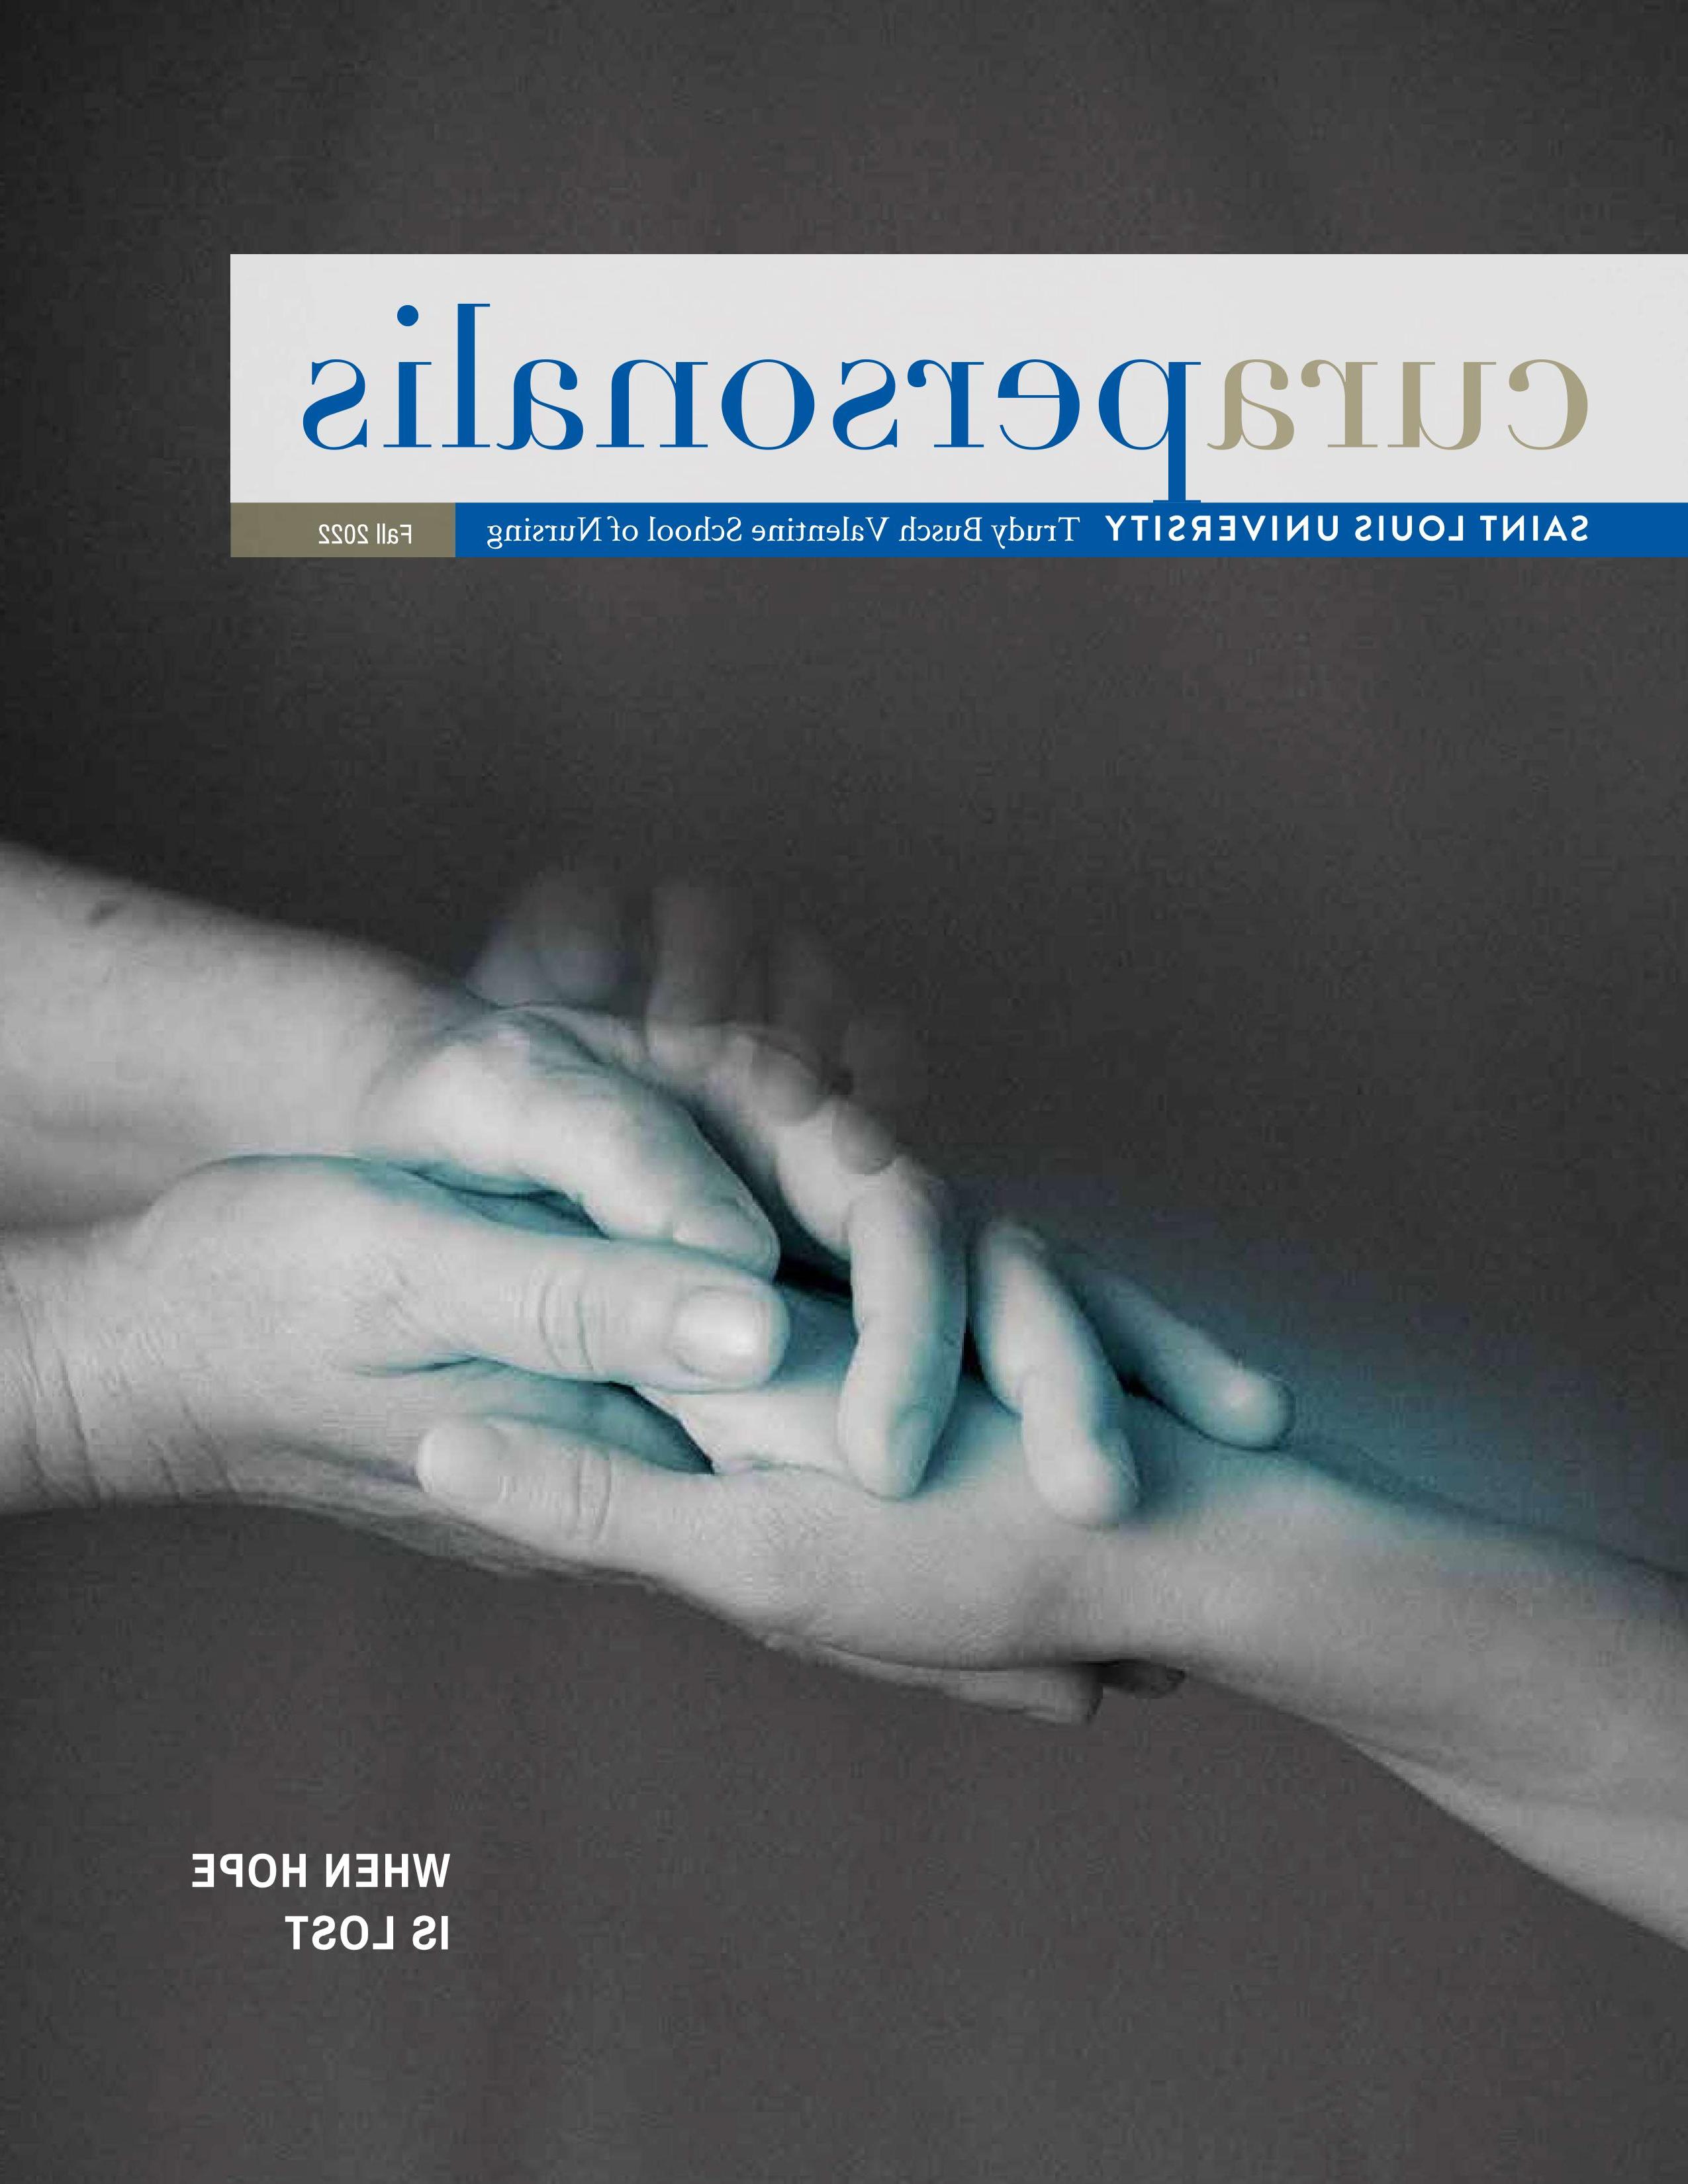 《cura personlis》杂志20121年的封面上有一张手的特写